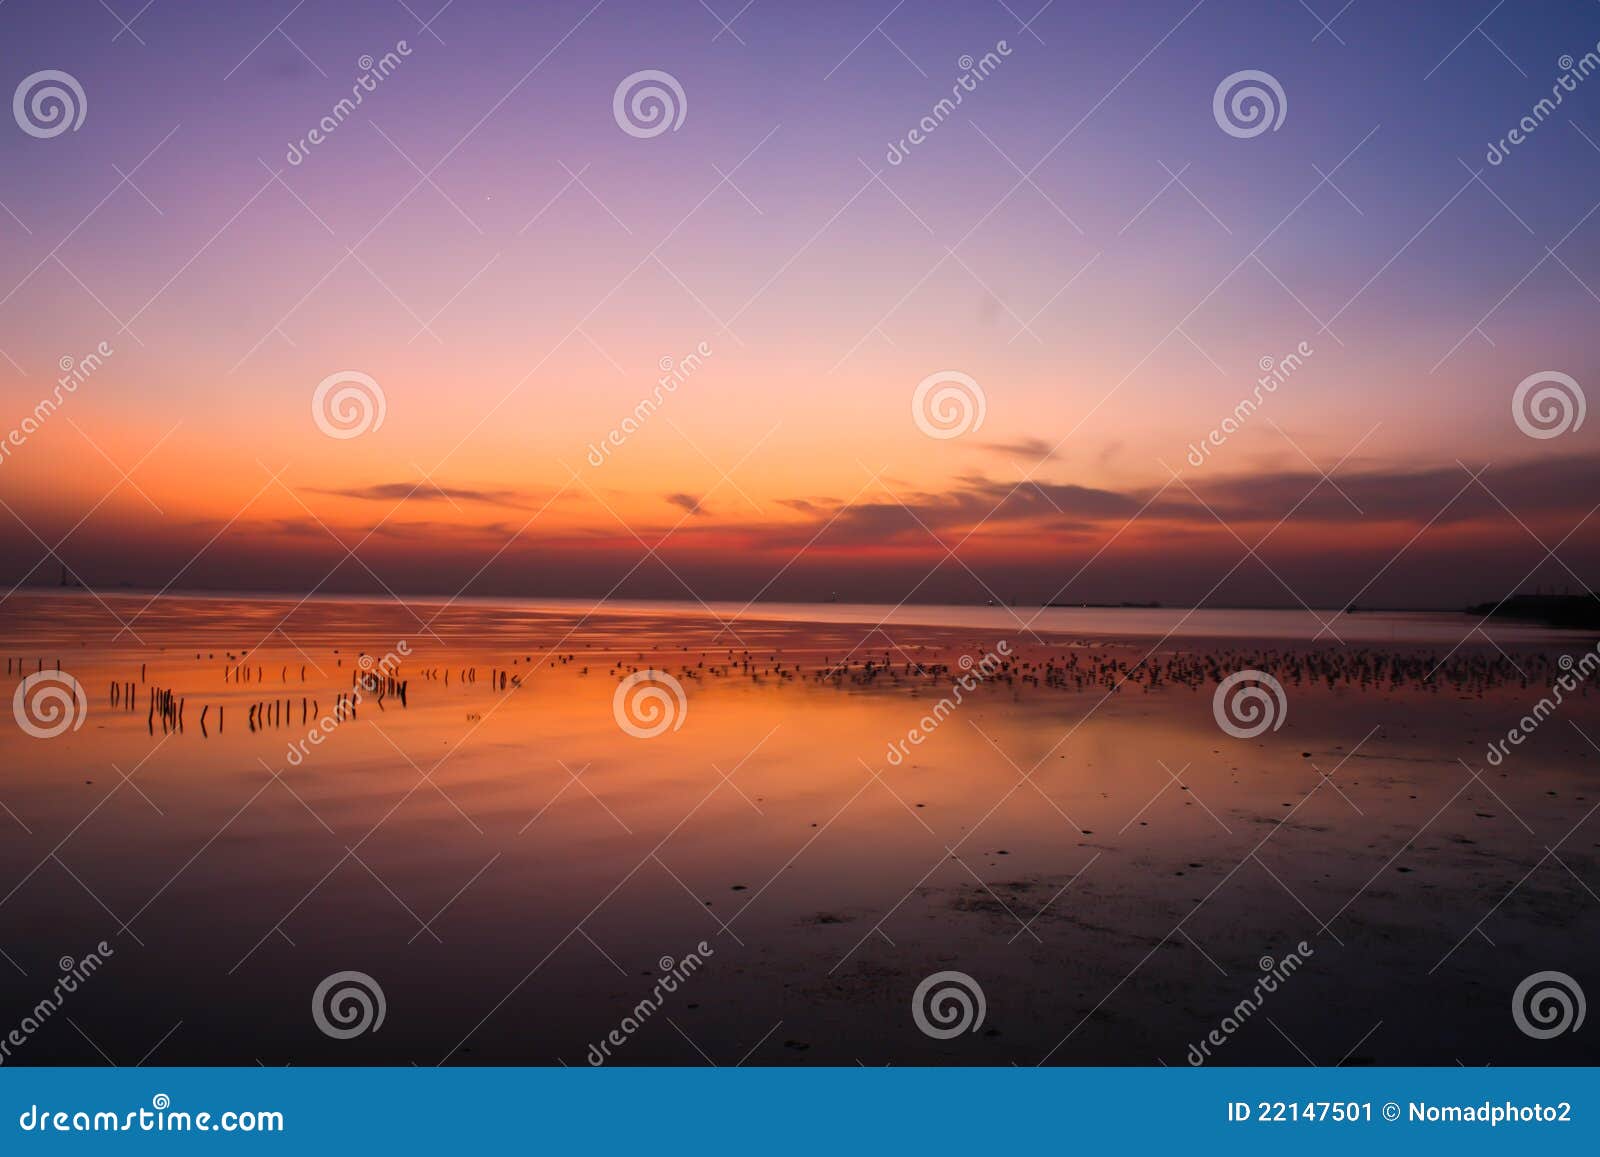 Sunset beach stock image. Image of nature, season, beach - 22147501